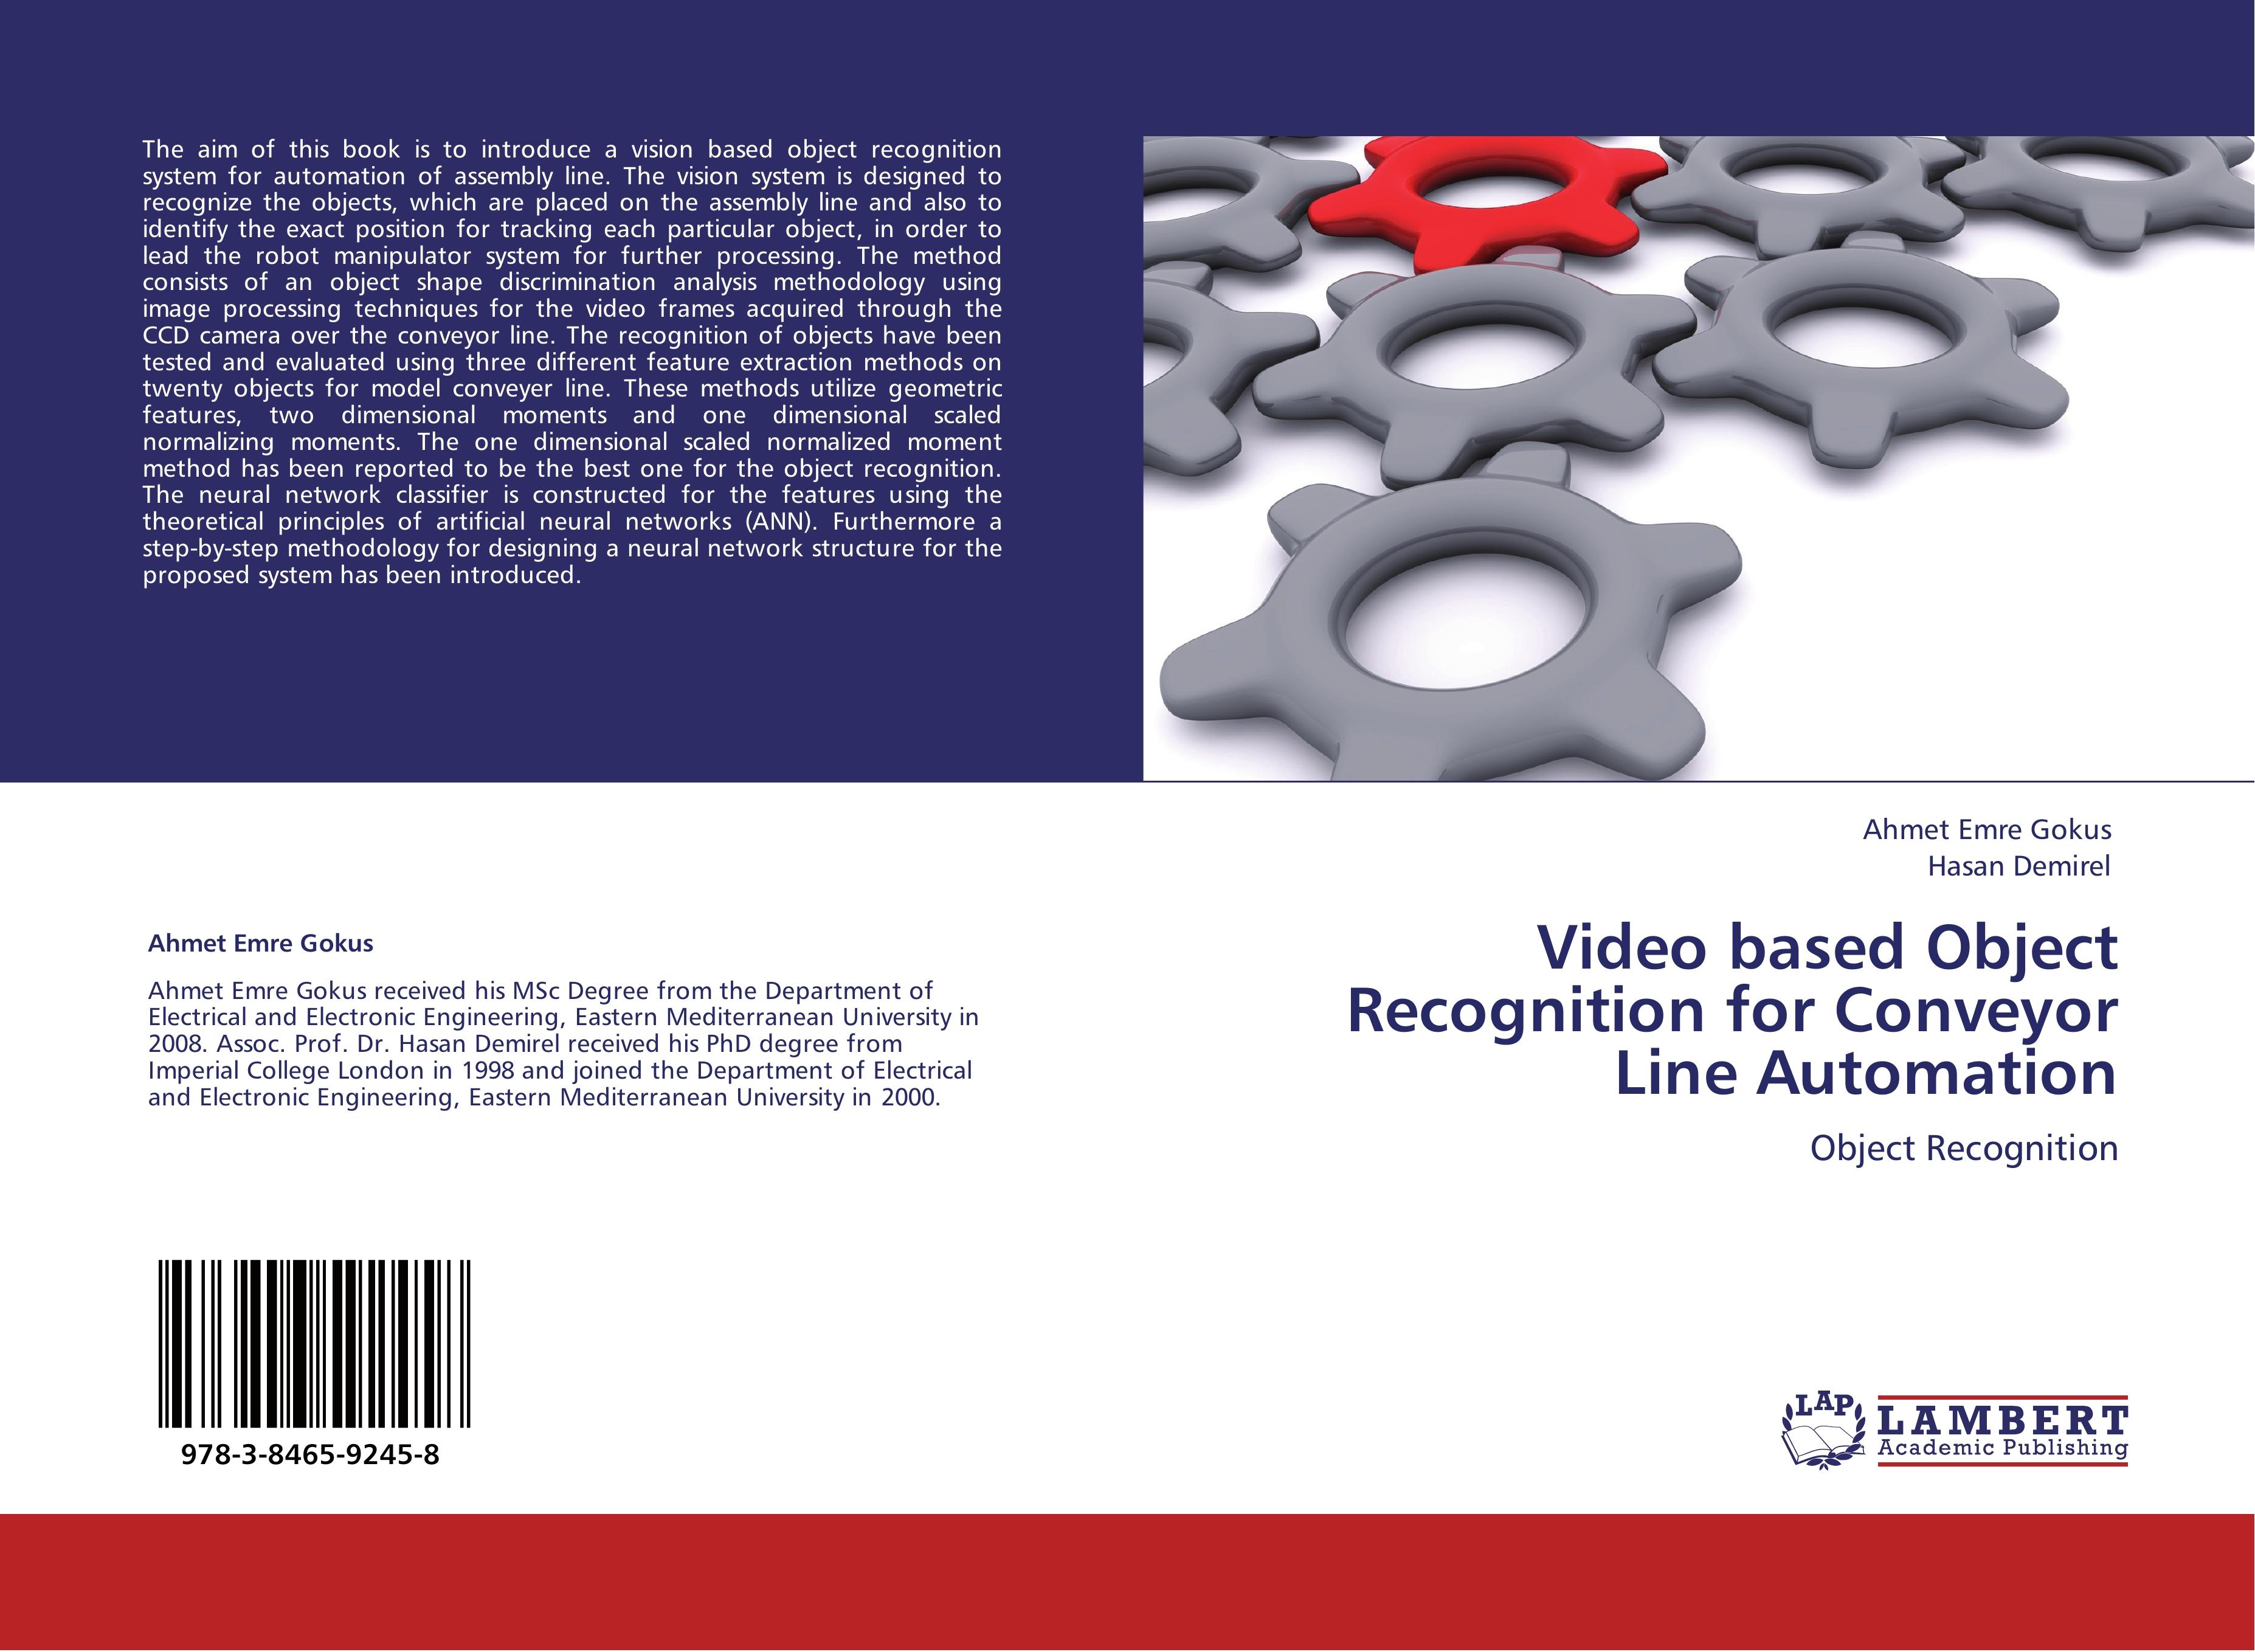 Video based Object Recognition for Conveyor Line Automation - Ahmet Emre Gokus Hasan Demirel